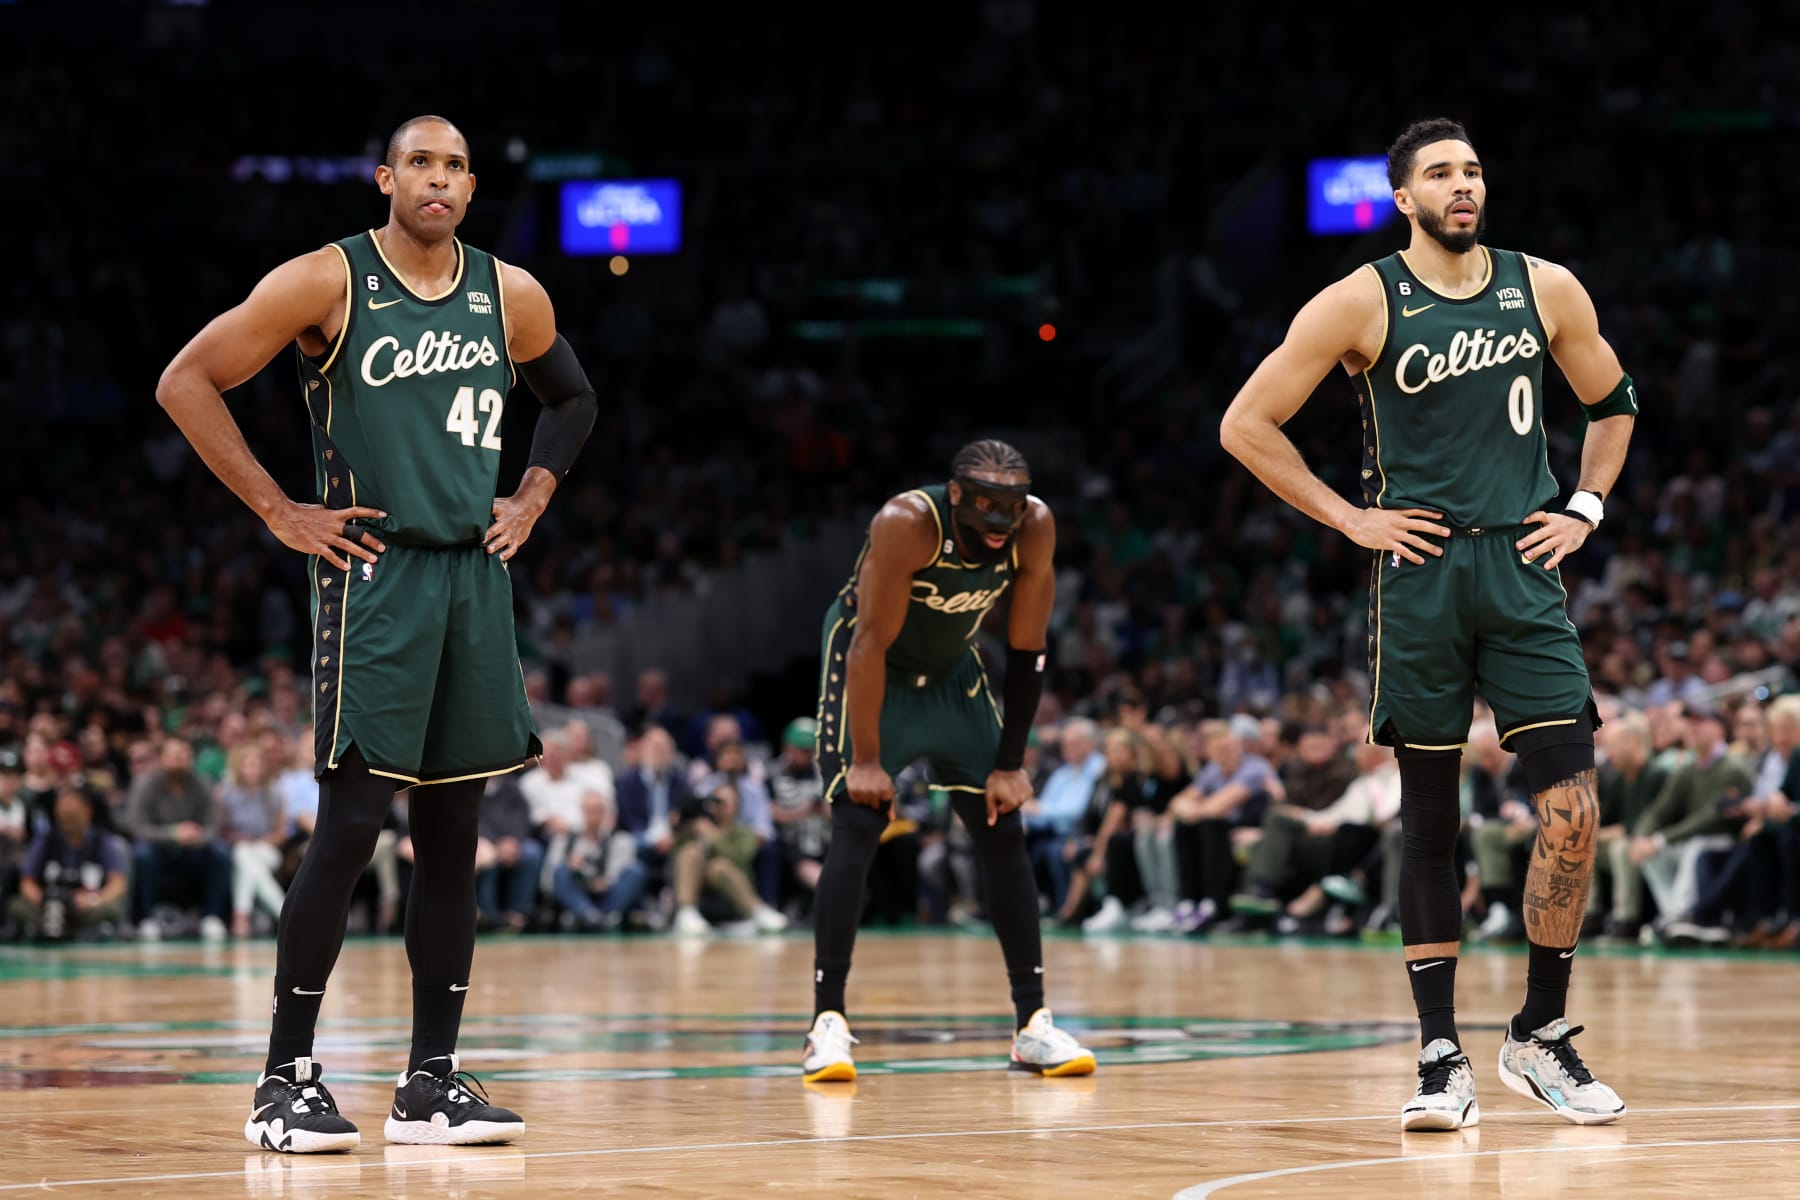 Celtics make roster move amid rumored Jrue Holiday interest